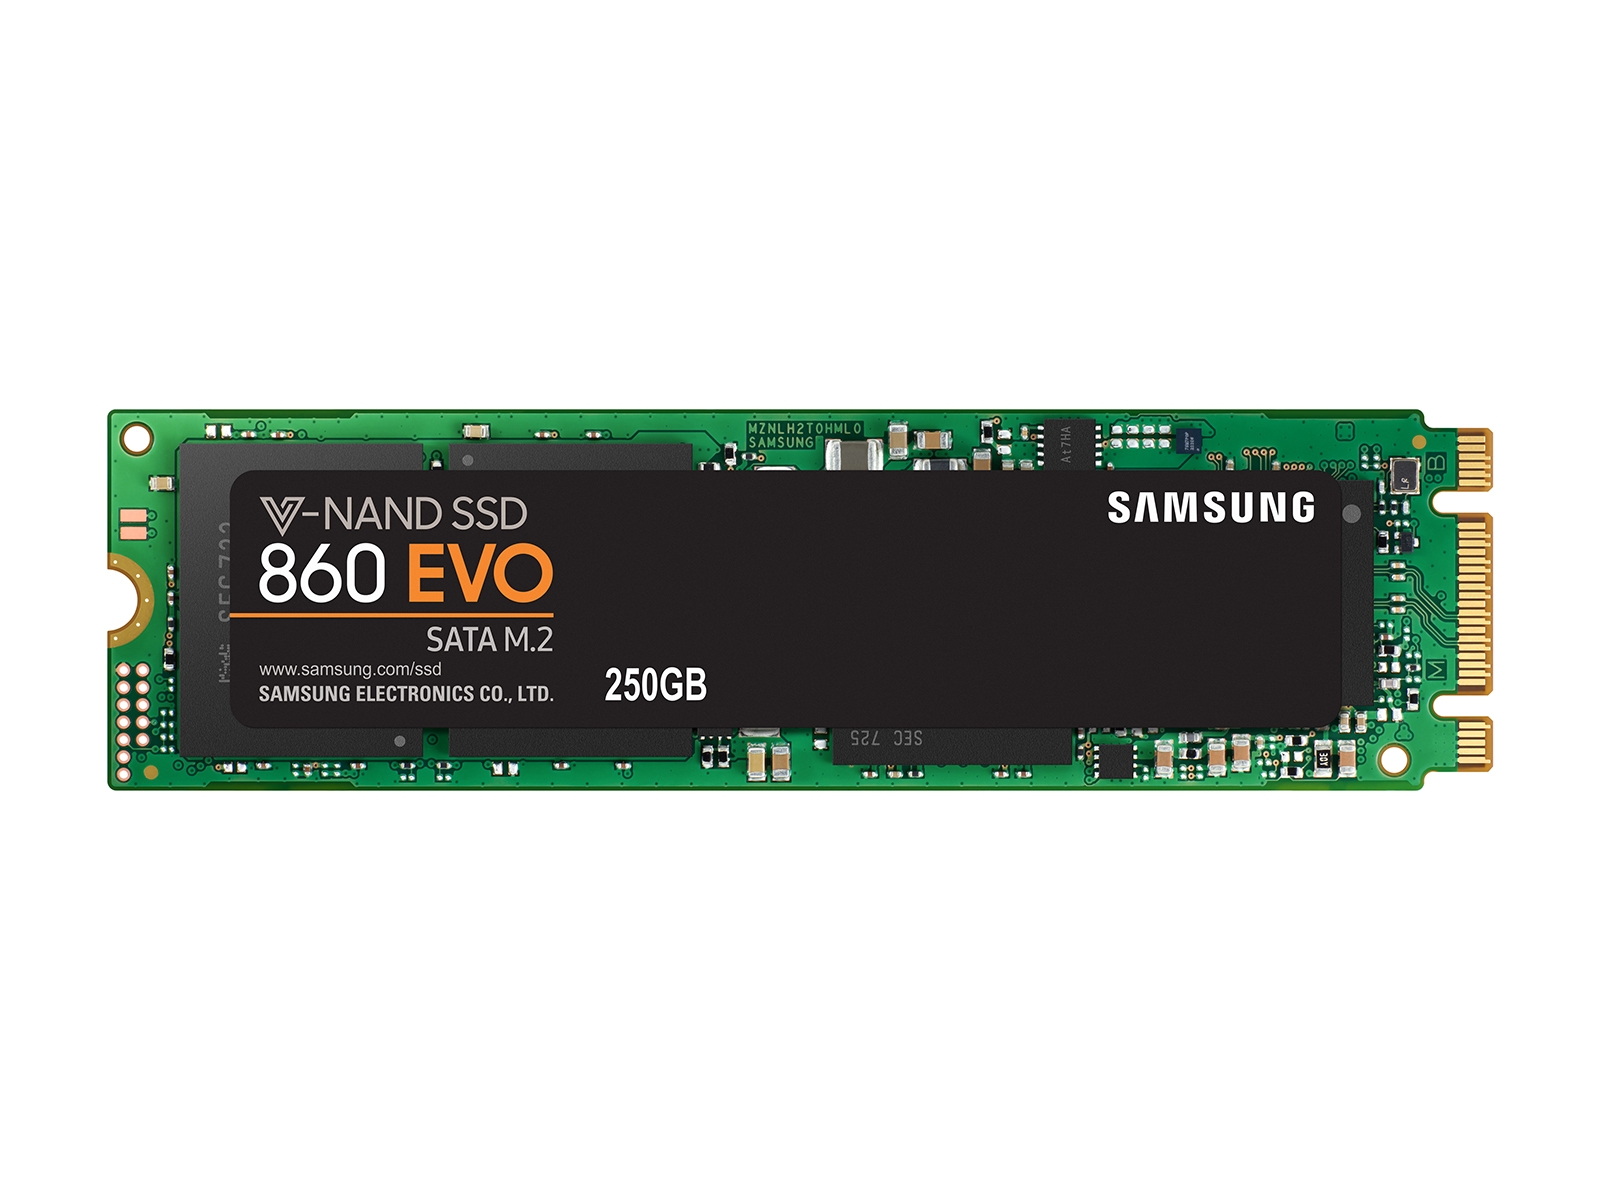 NIB Samsung 860 EVO 250GB SSD 2.5"SATA III Internal Solid State Drive MZ-76E250 